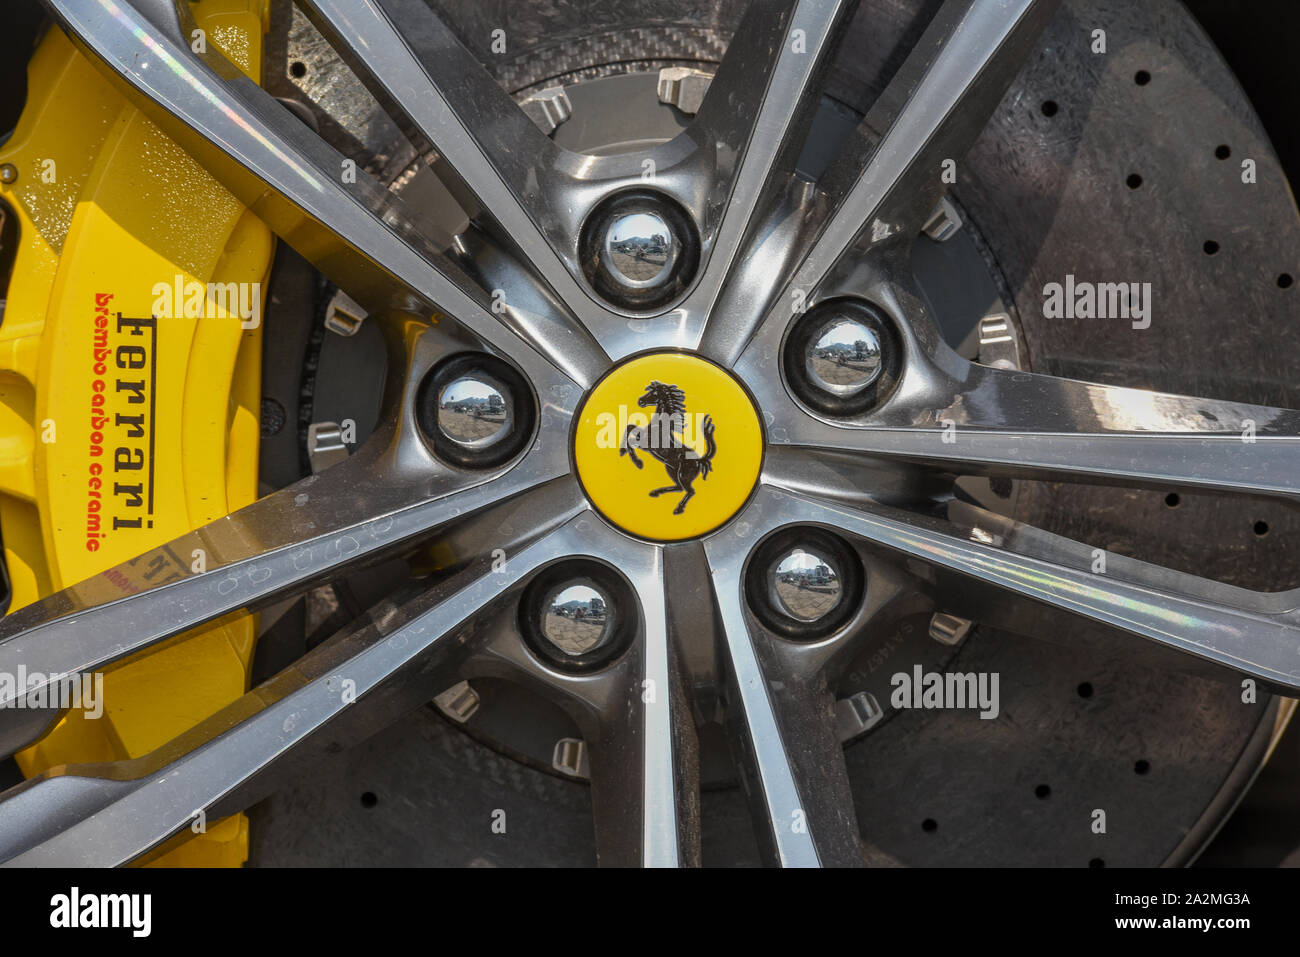 Lugano, Switzerland - 23 March 2010: Ferrari logo on the wheel of a car Stock Photo